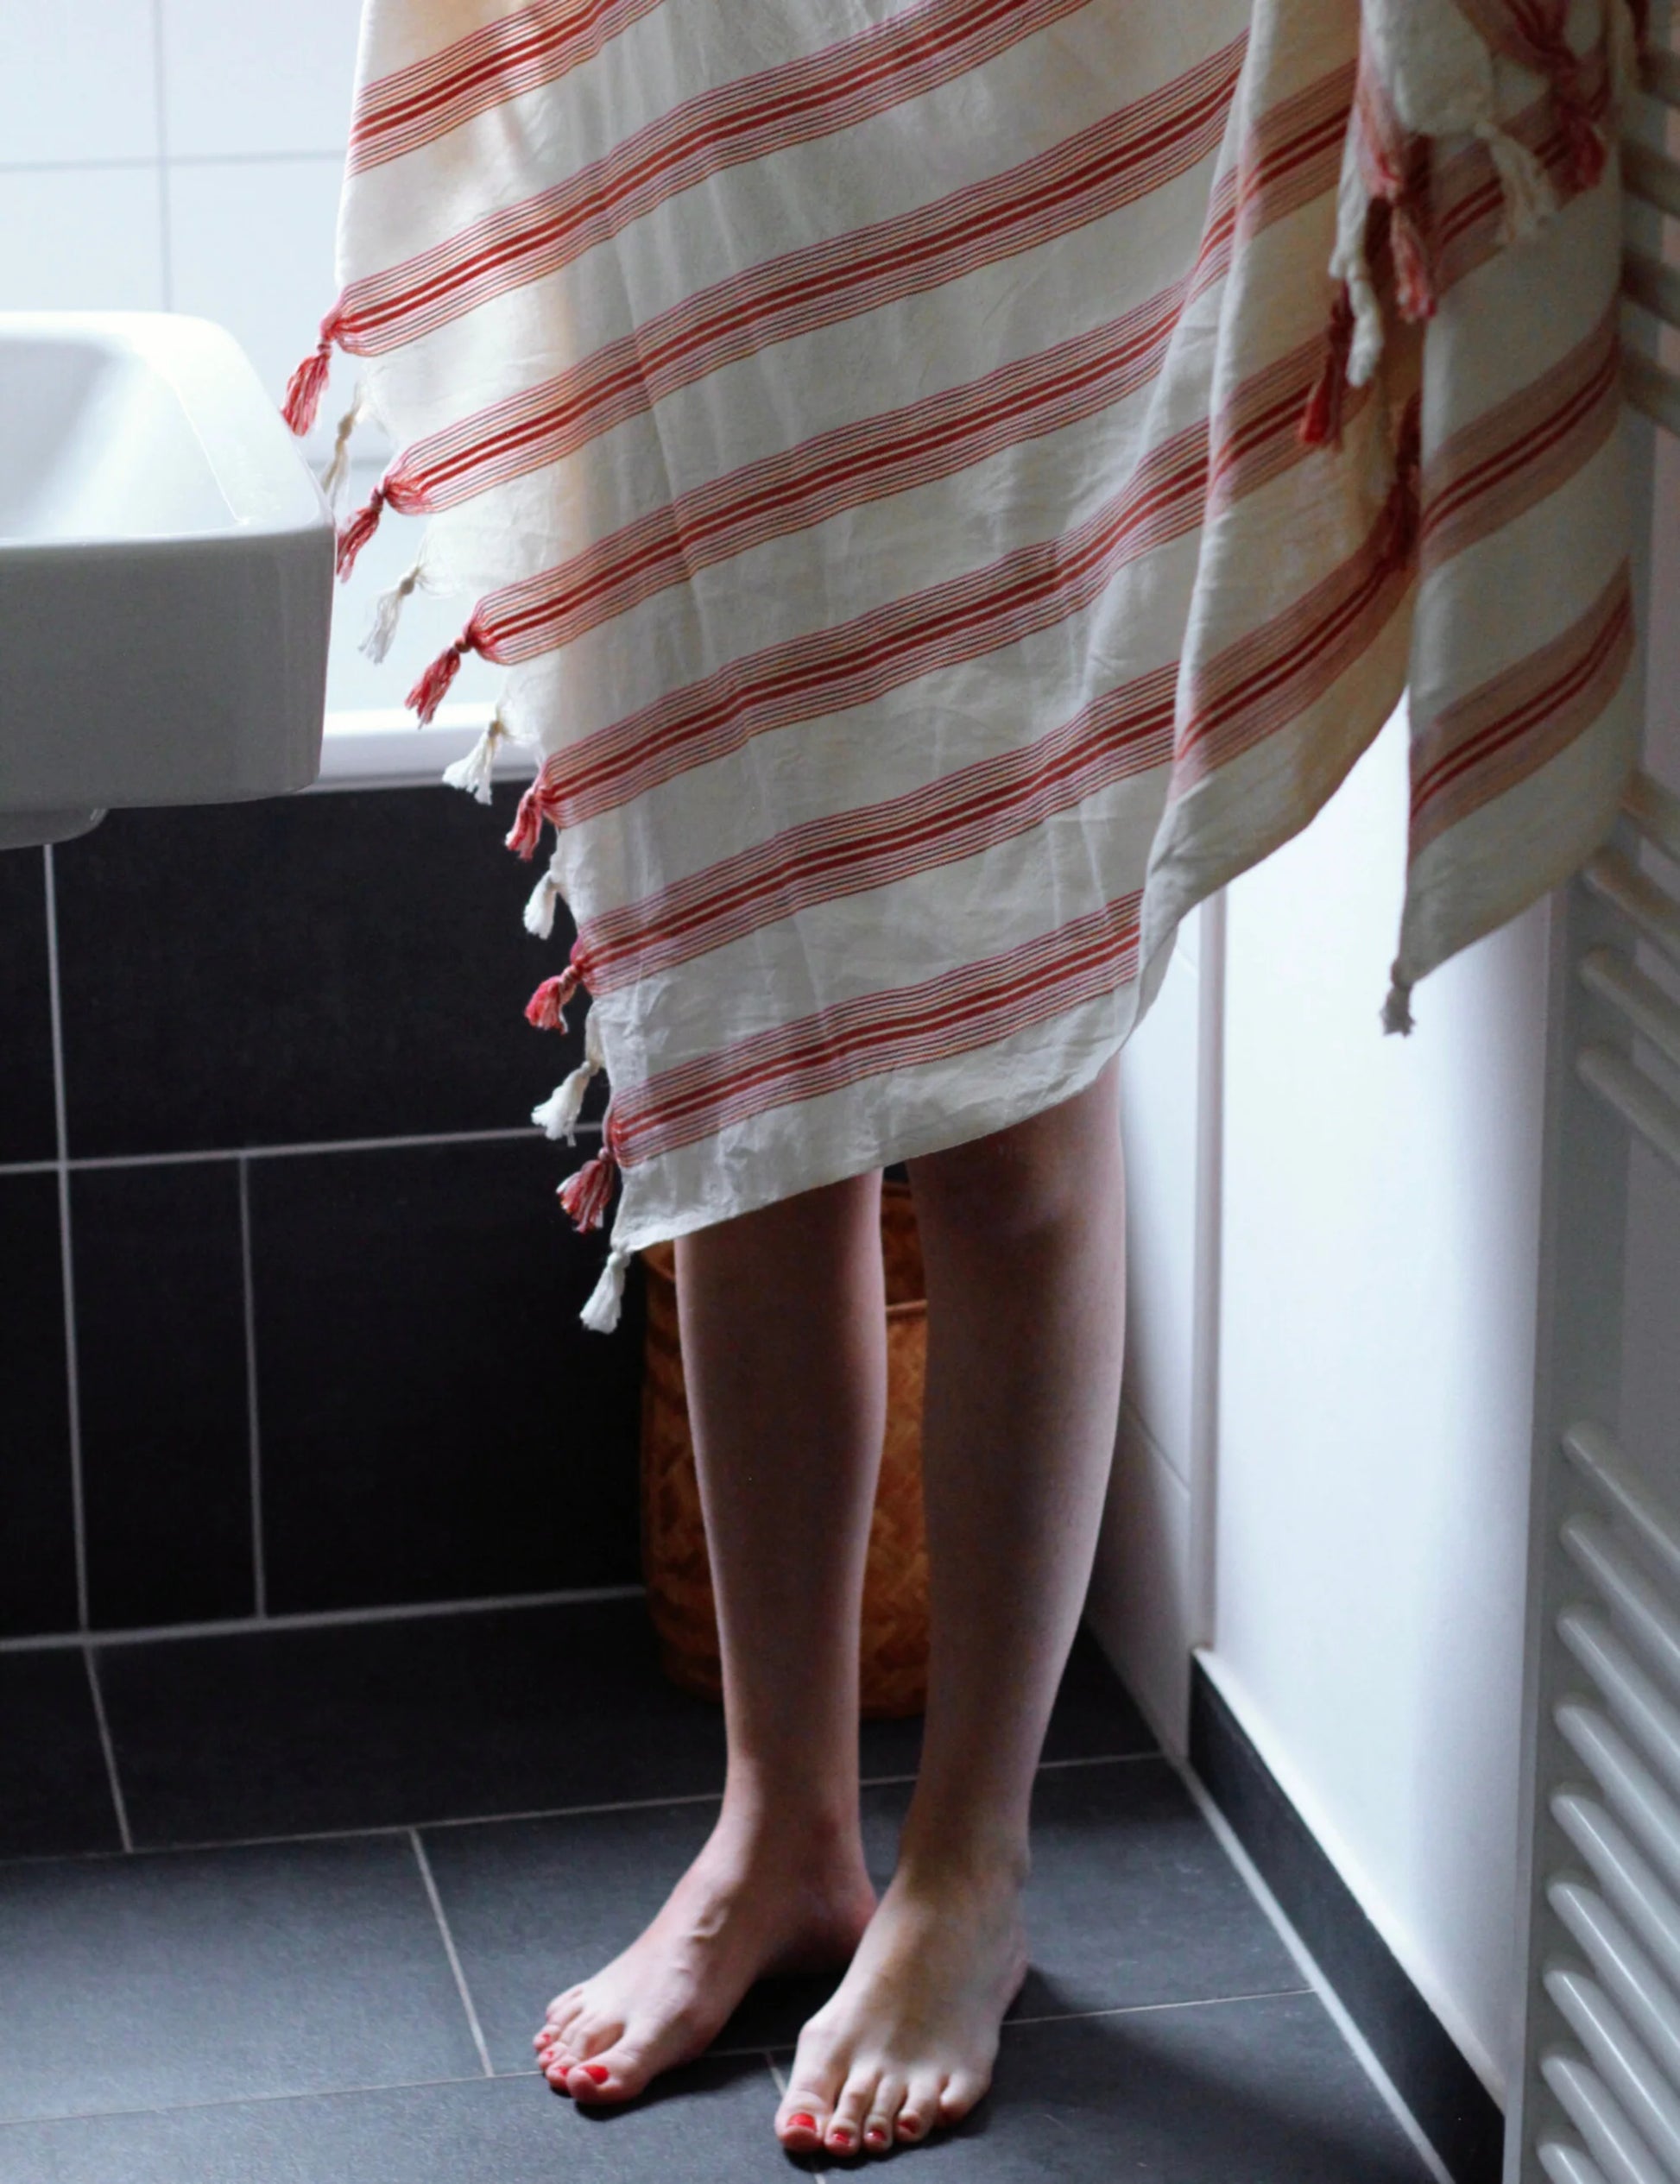 Ruby Handwoven Hammam Towel